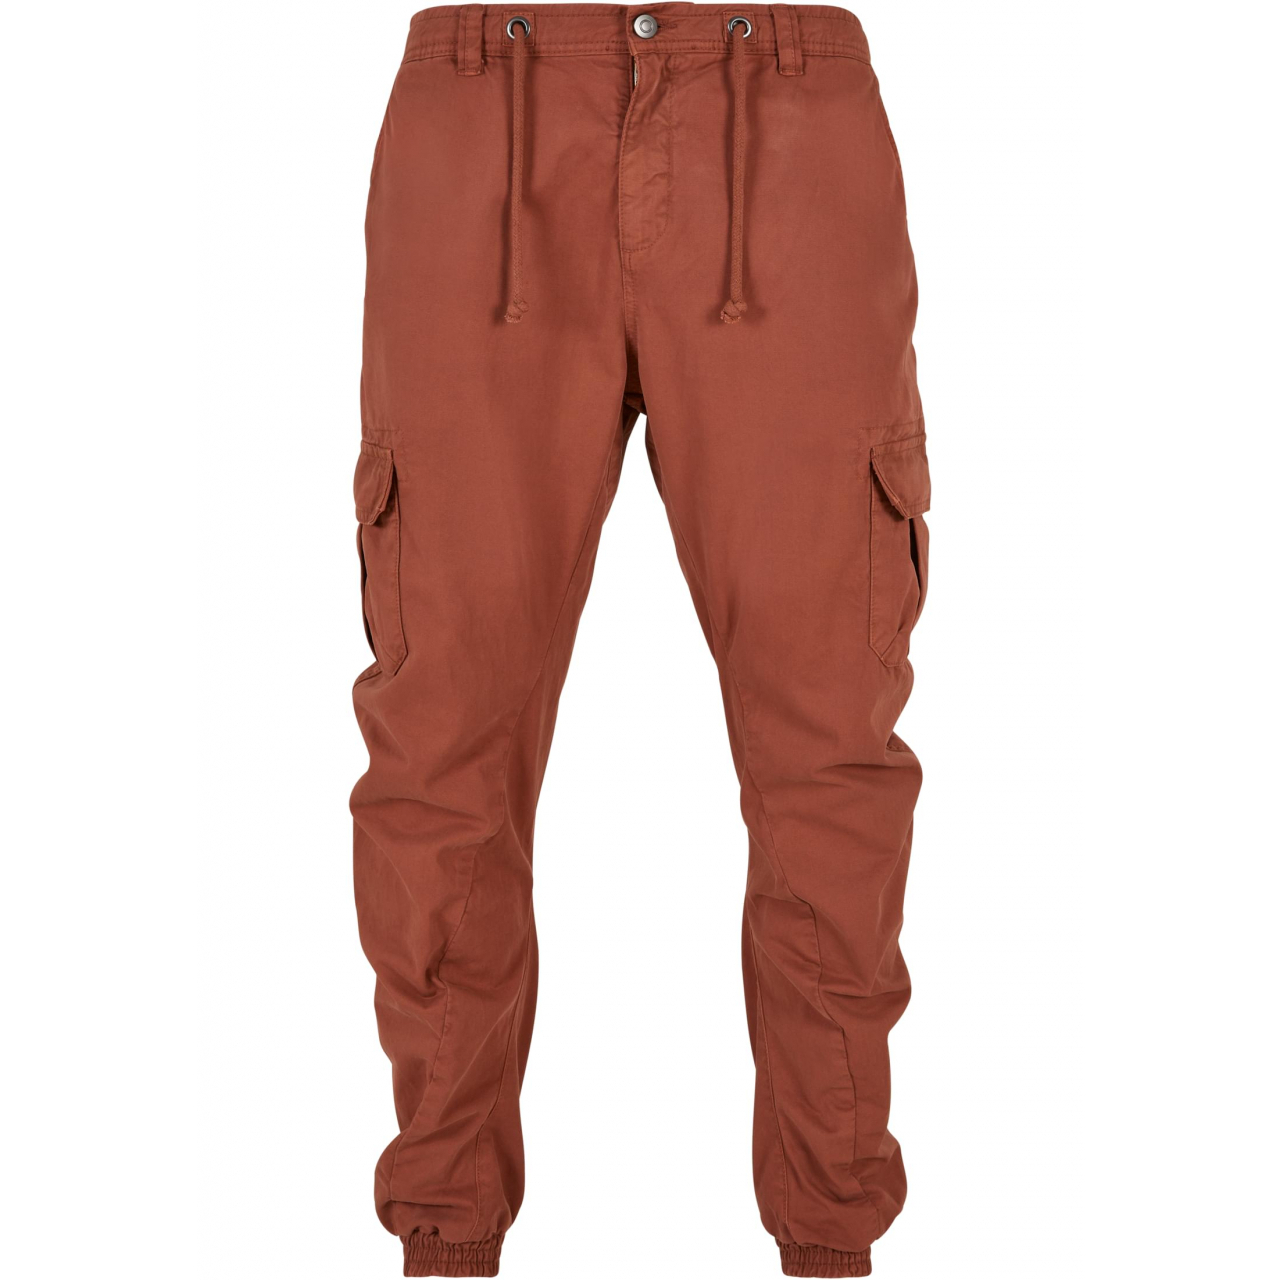 Kalhoty Urban Classics Cargo Jogging - oranžové, XL